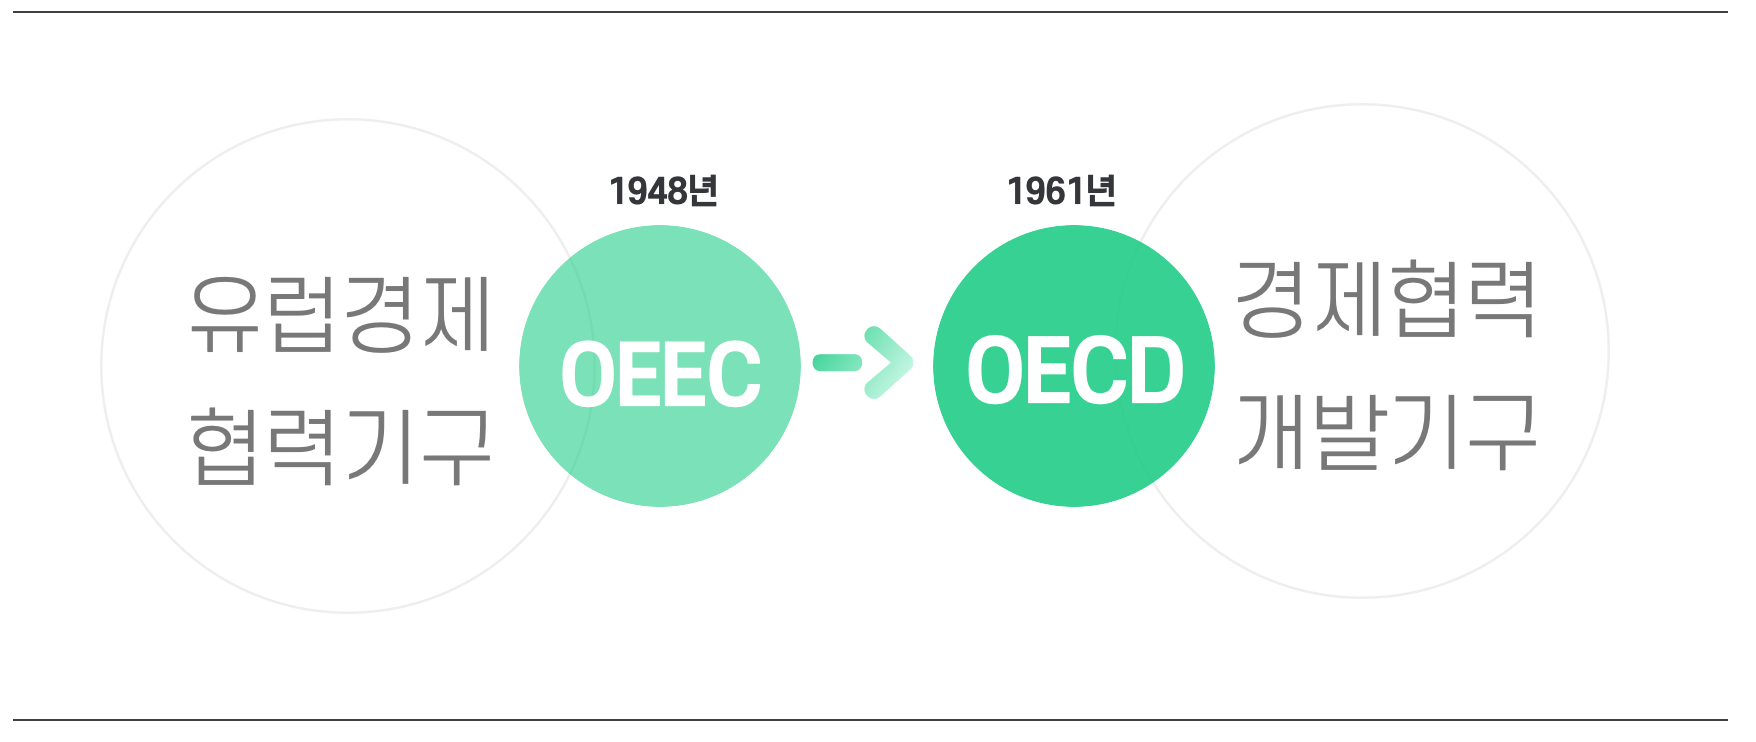 OECD의 시작